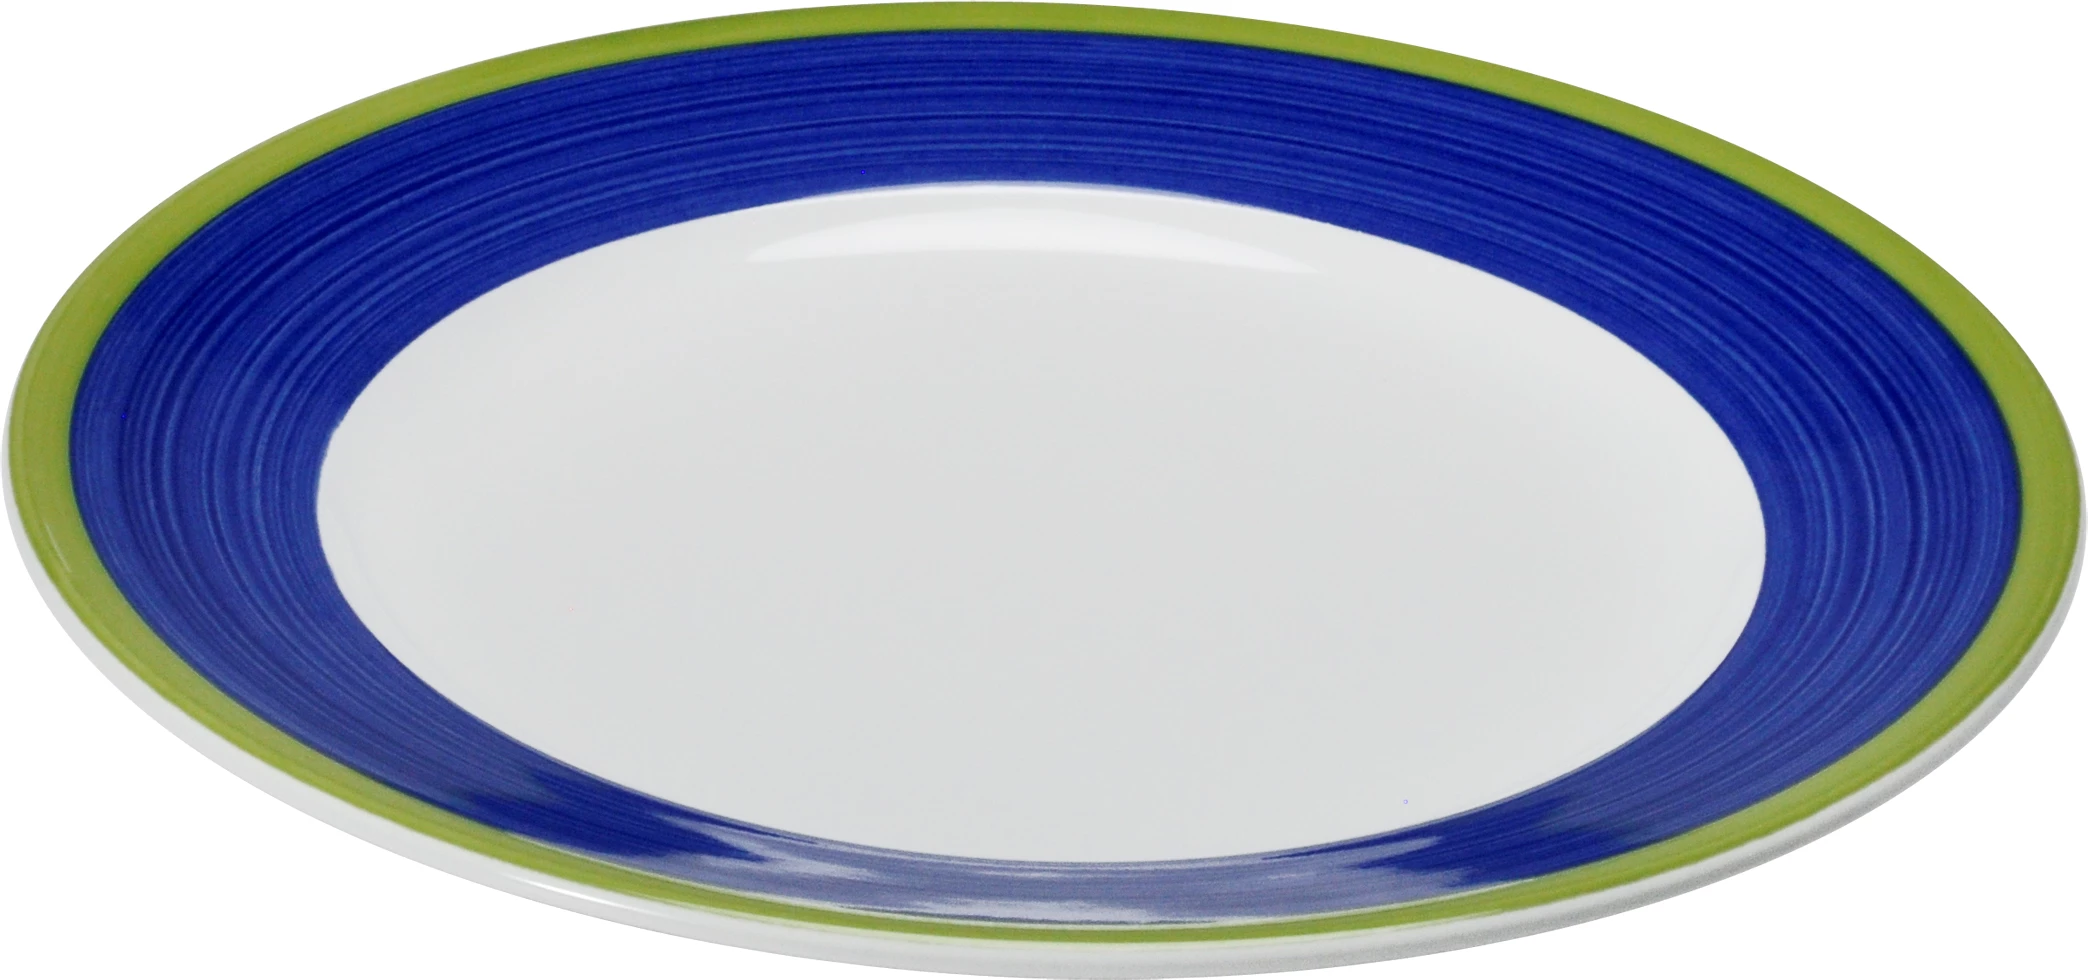 Figgjo Capri flad tallerken, blå, ø21 cm